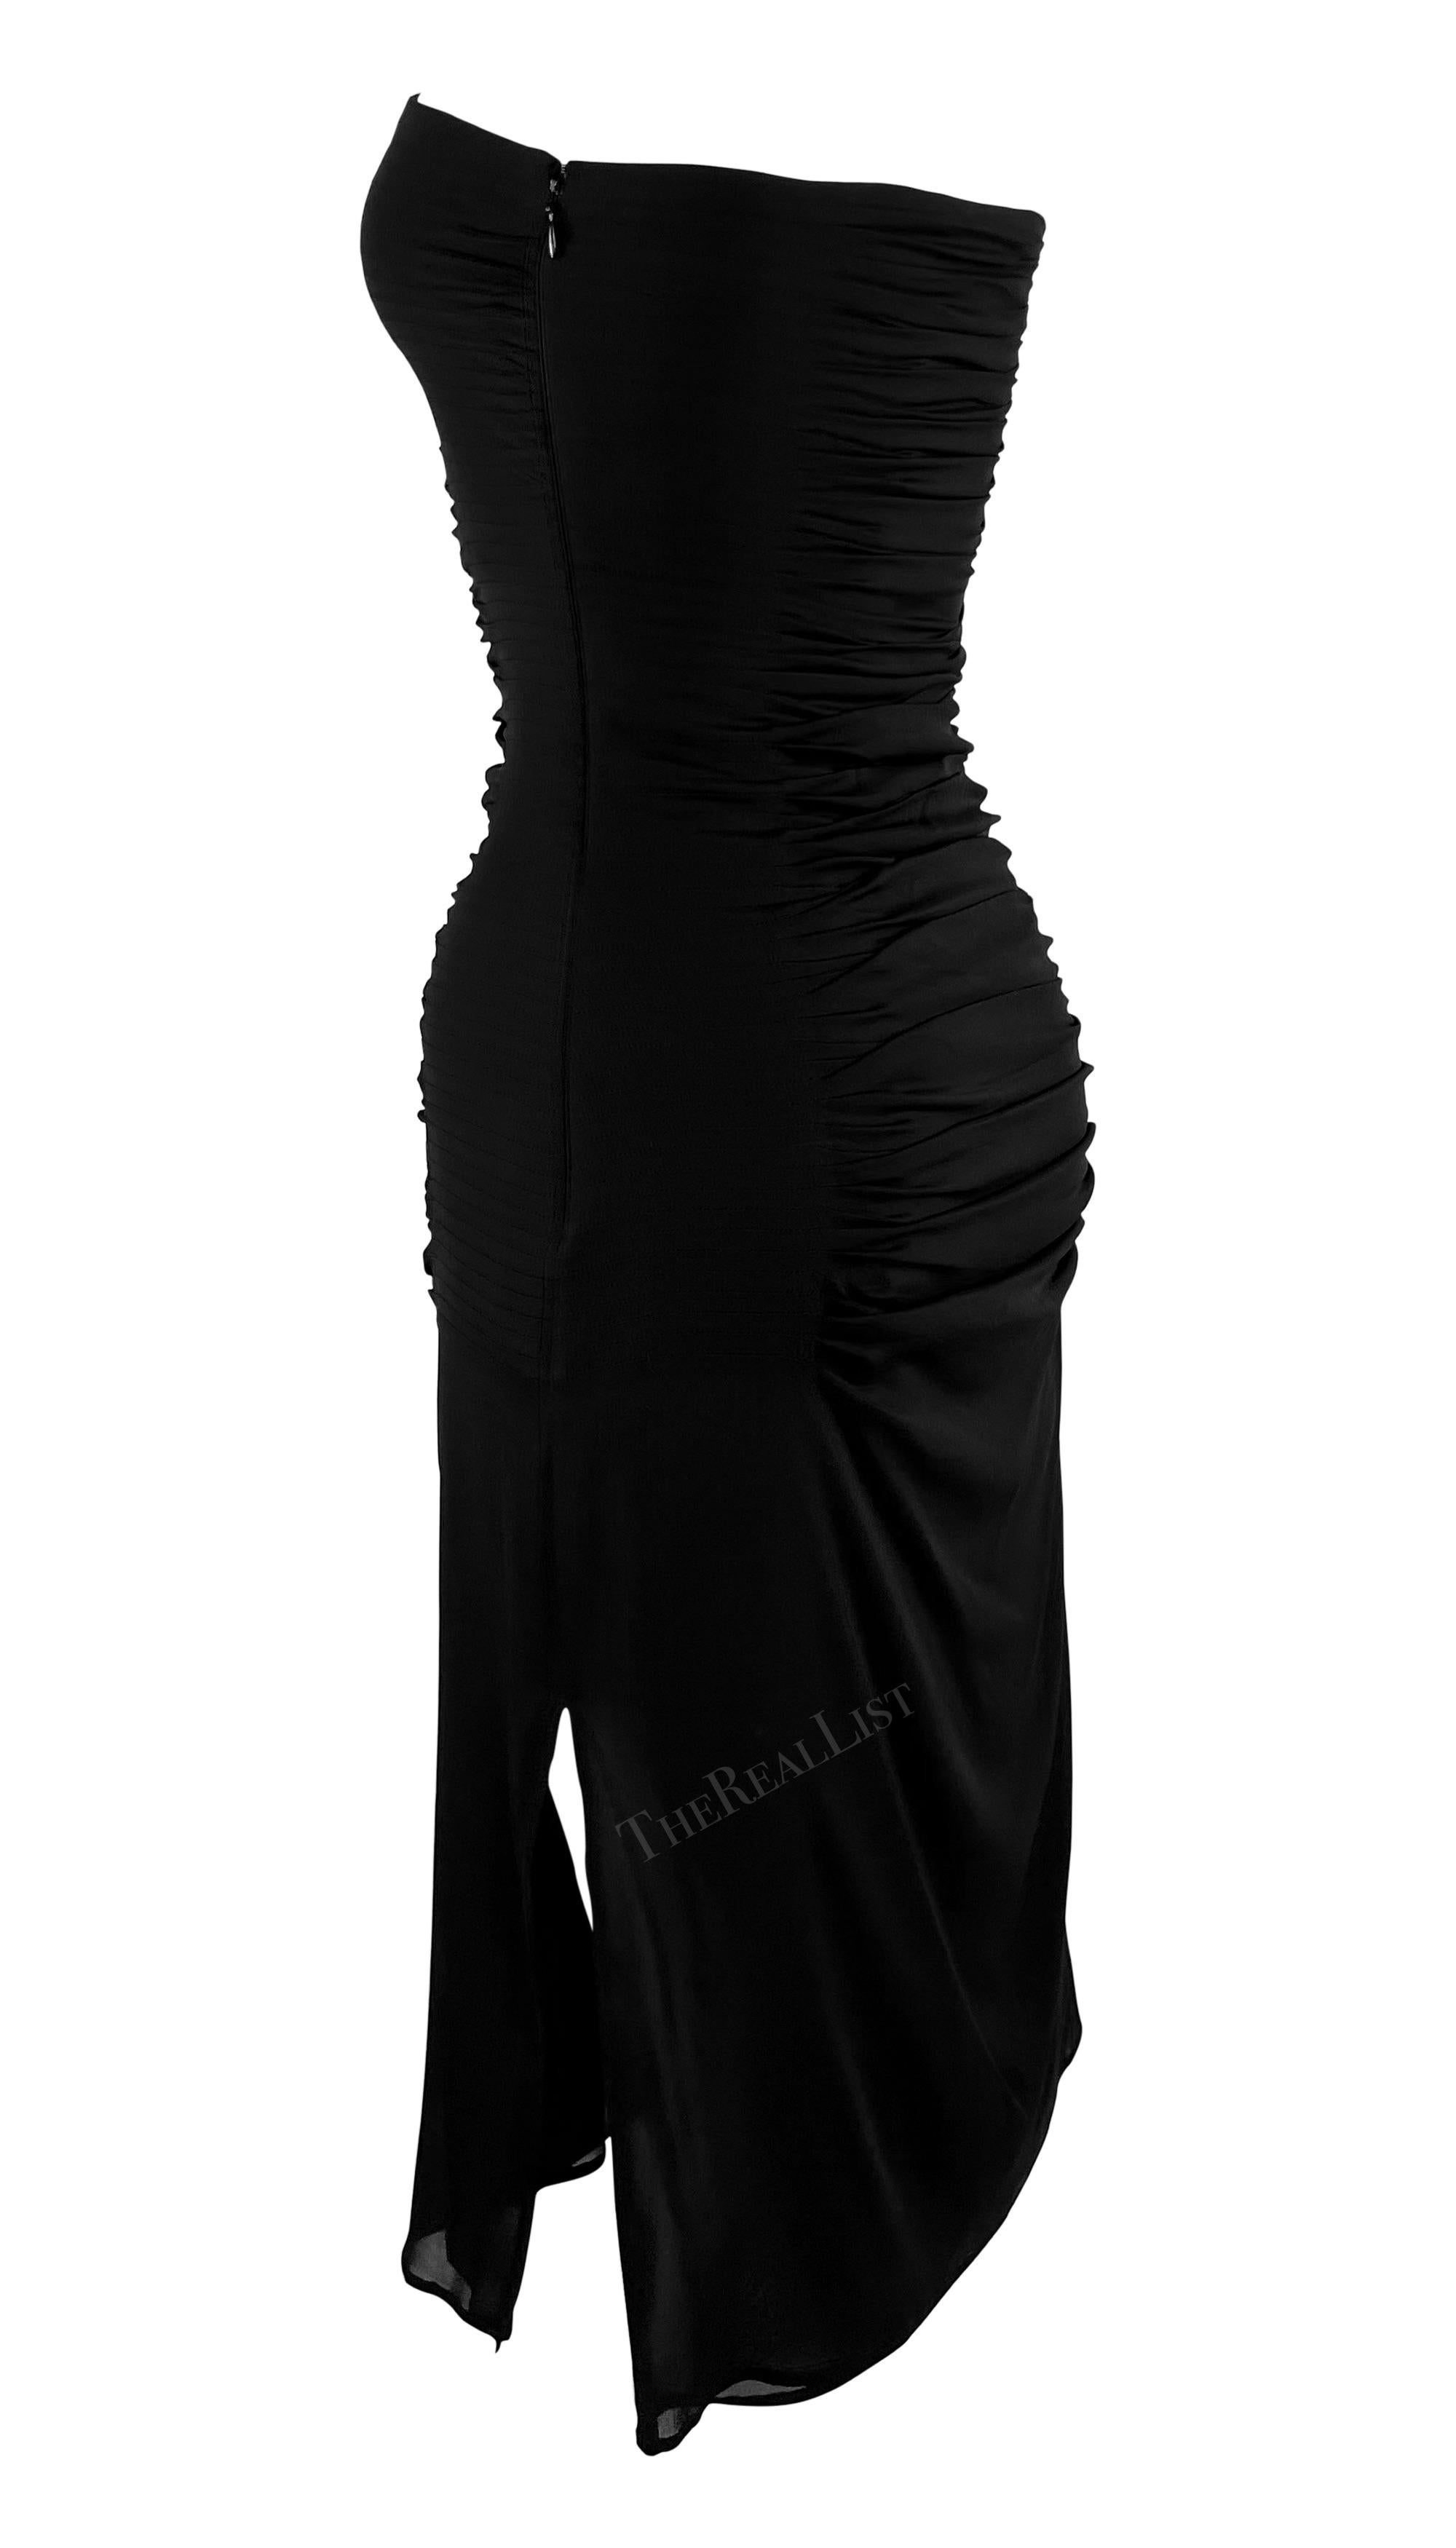 S/S 2001 Yves Saint Laurent by Tom Ford Sheer Black Pleated Strapless Mini Dress For Sale 1